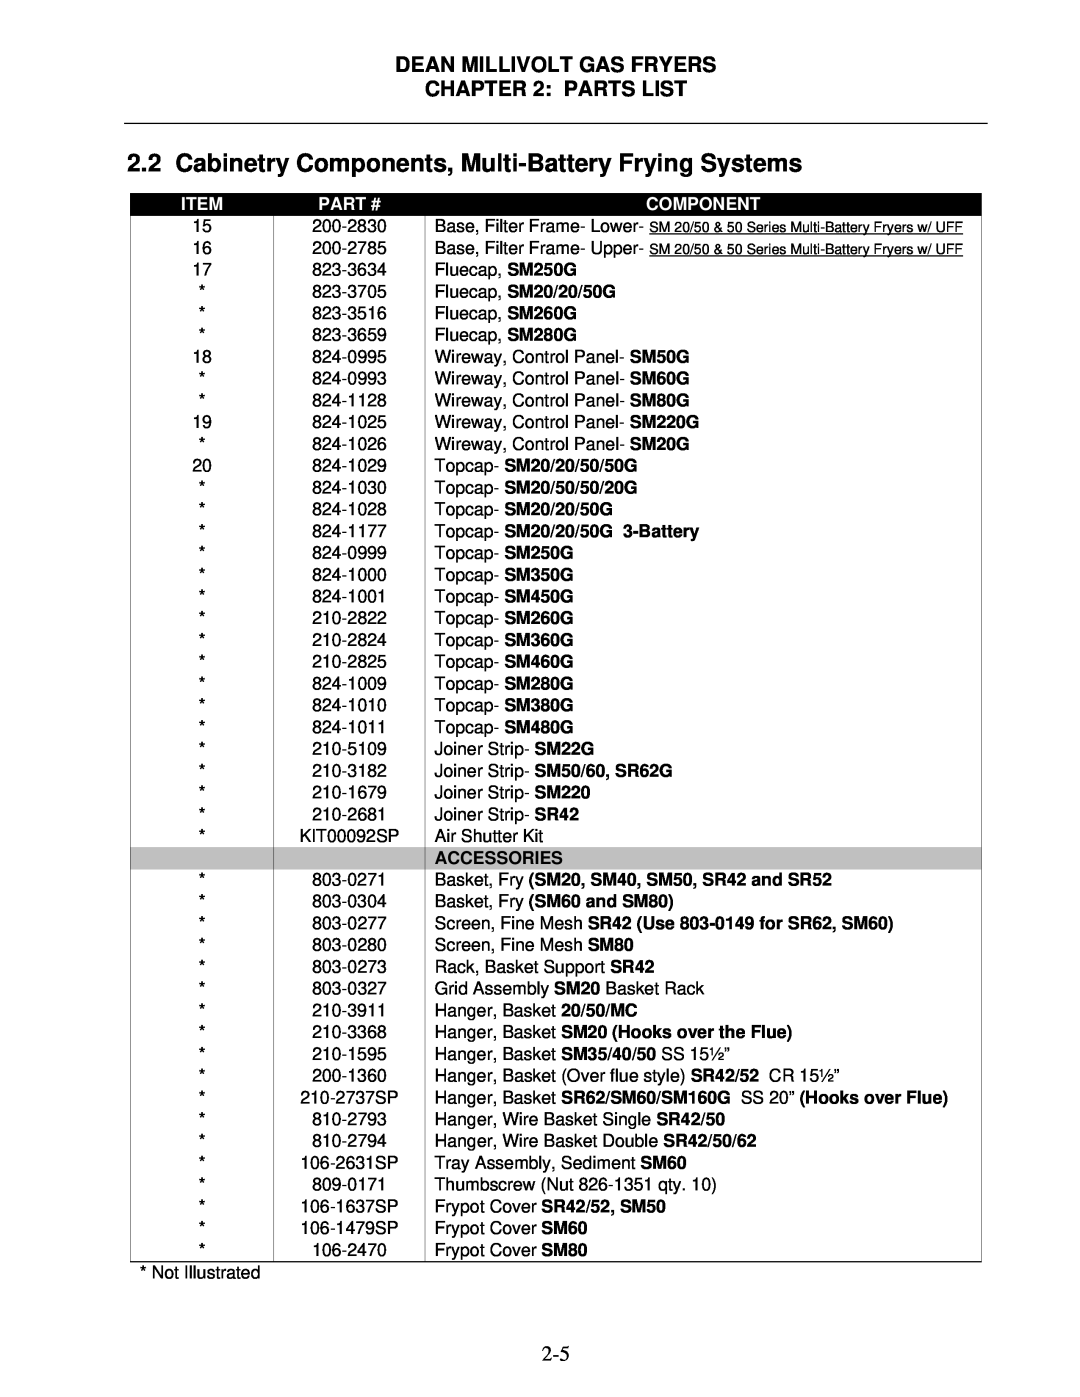 Frymaster Super Runner Series manual Dean Millivolt Gas Fryers : Parts List, Item, Part #, Component, Fluecap, SM20/20/50G 